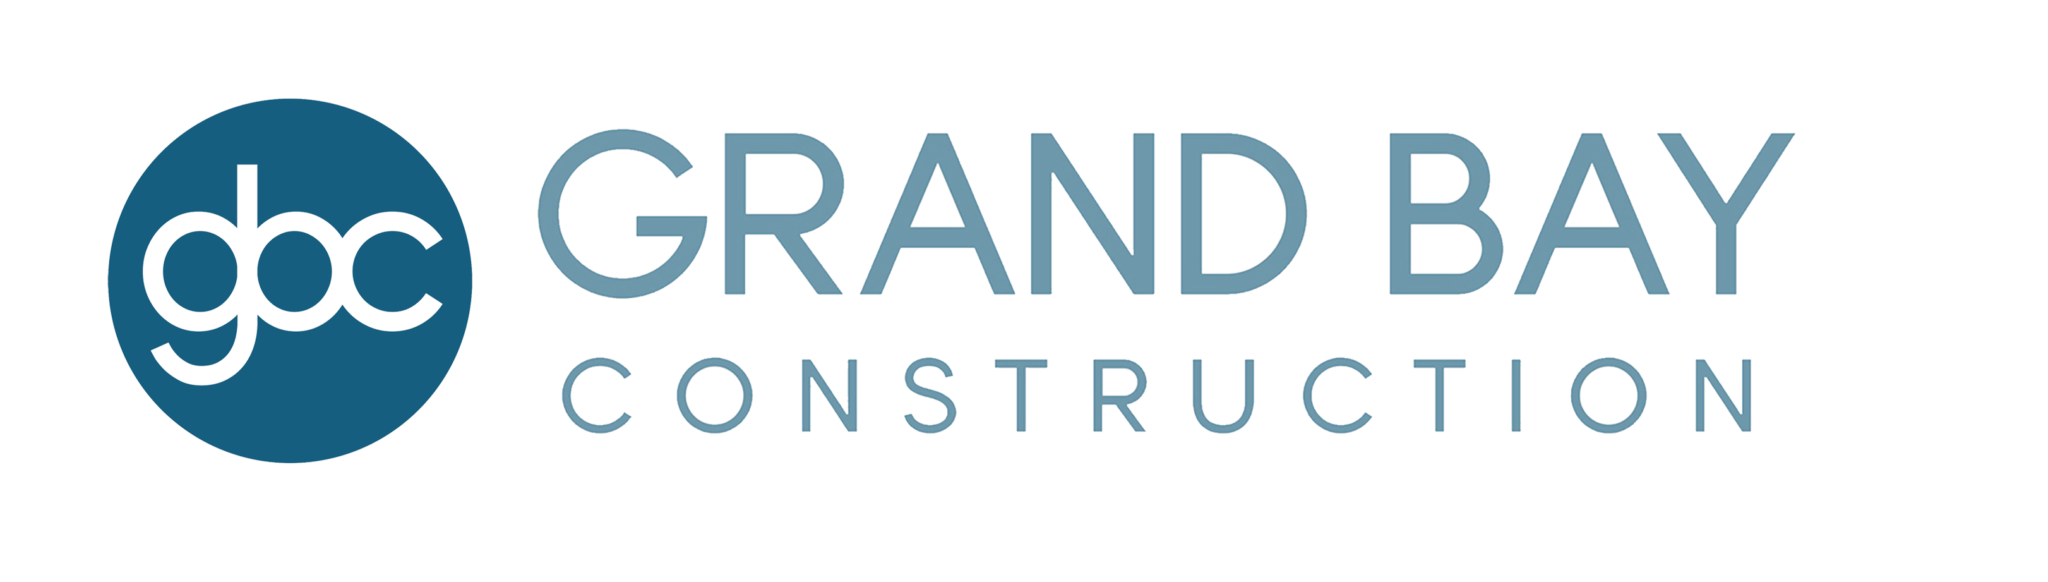 Grand Bay Construction - The Little J Marketing